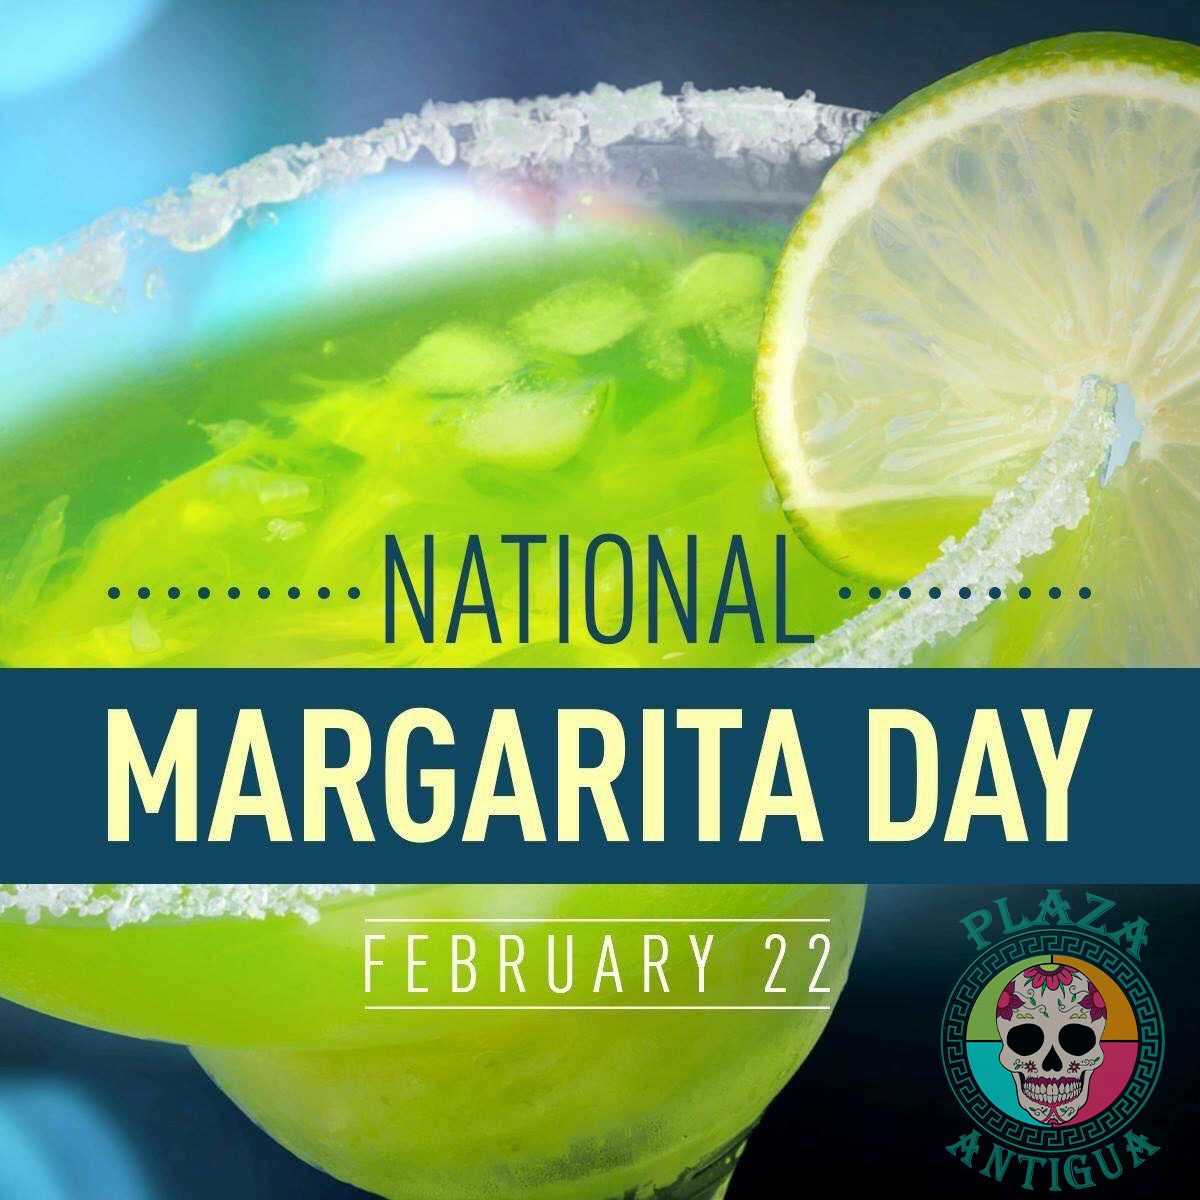 National Margarita Day @ Plaza Antigua